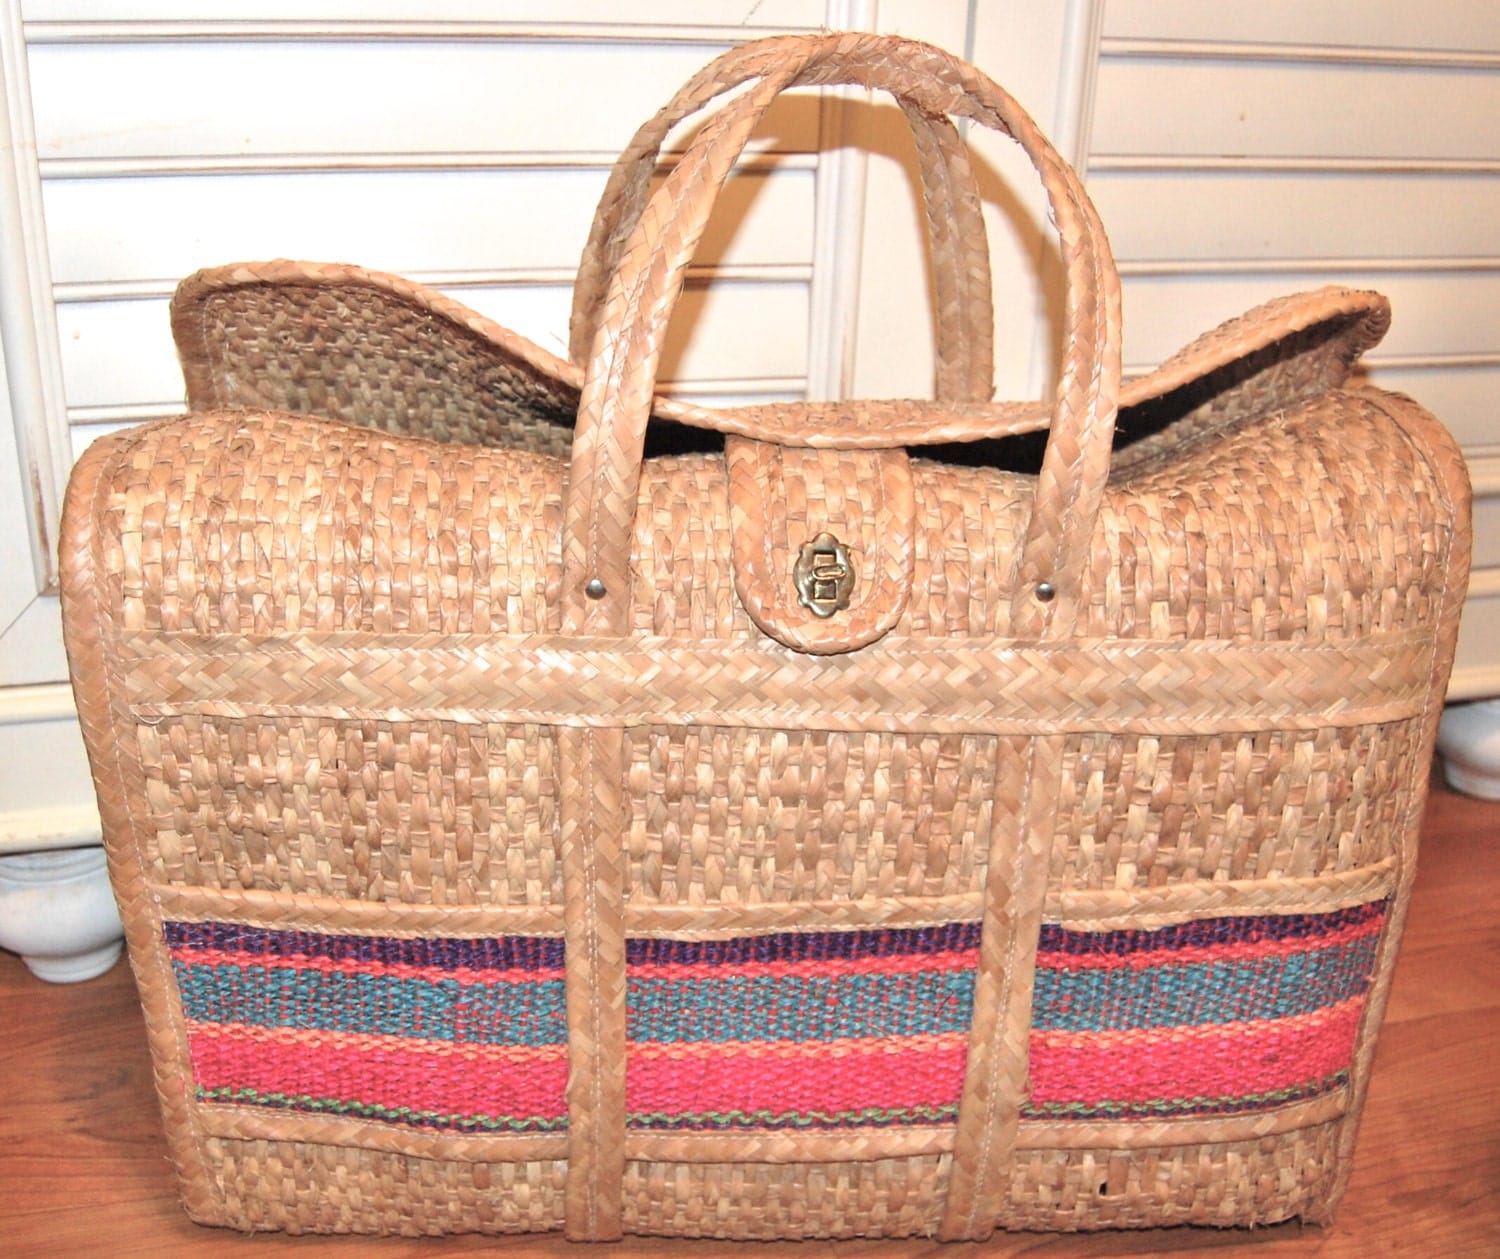 BEACH BAG Woven Seagrass Summer Tote Bag handbag by RetroNeeds